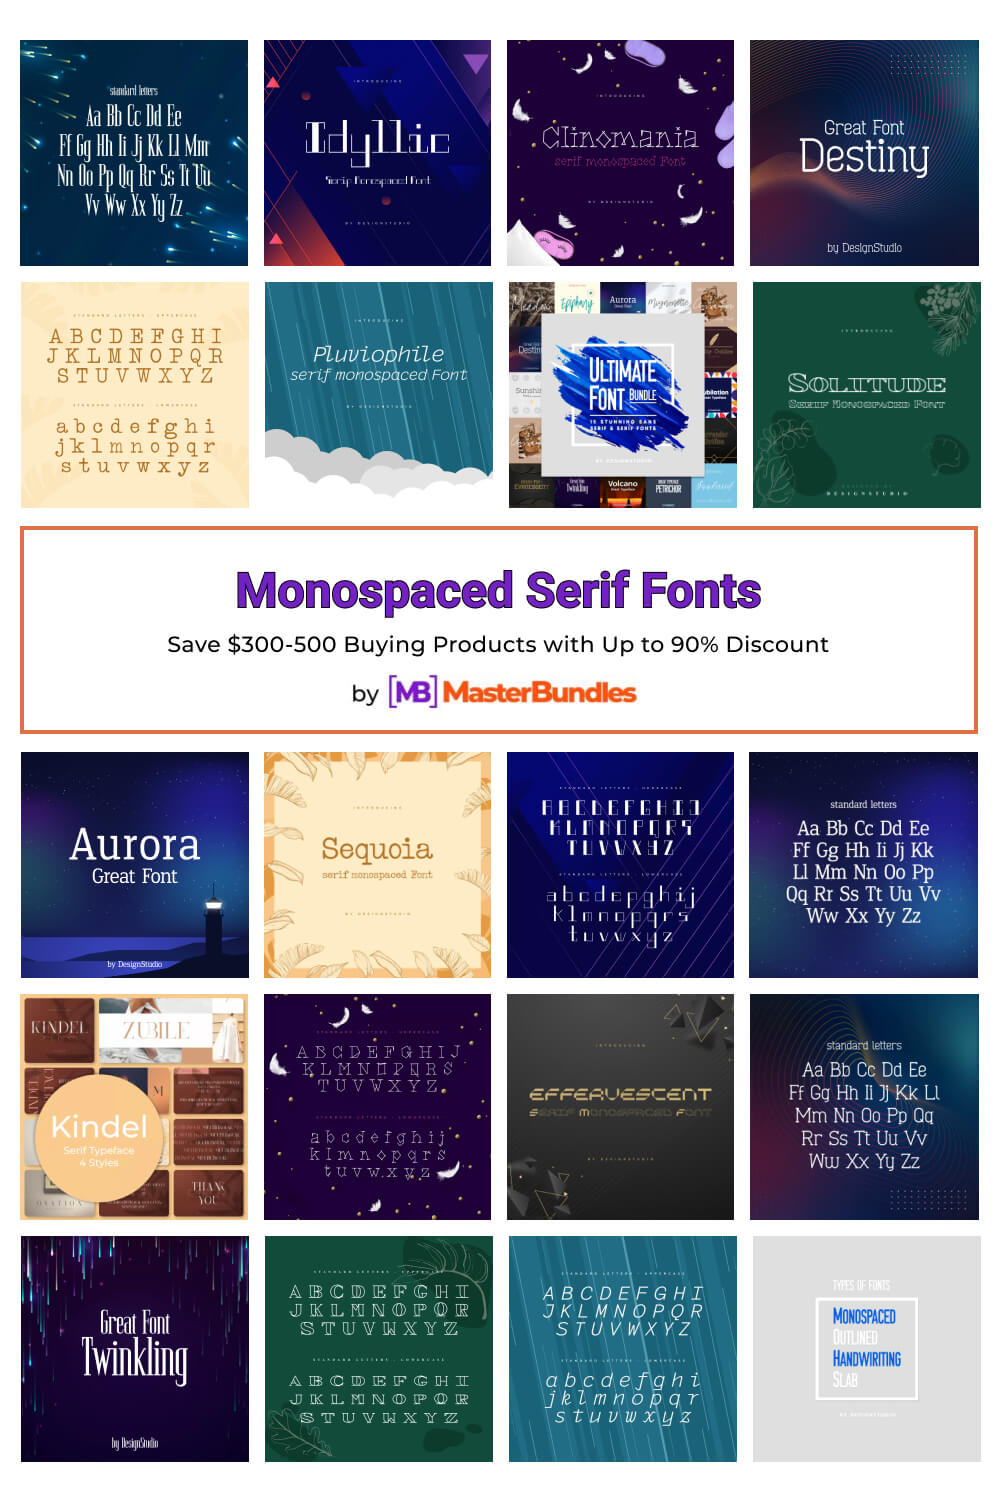 monospaced serif fonts pinterest image.